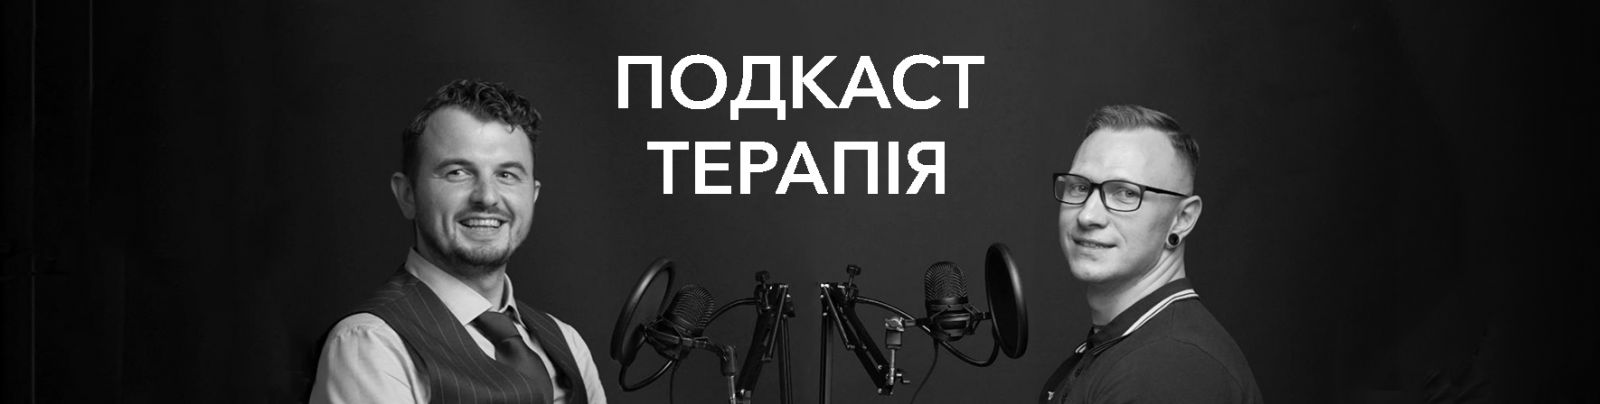 Podcast Terapia u Kropyvnitskomu